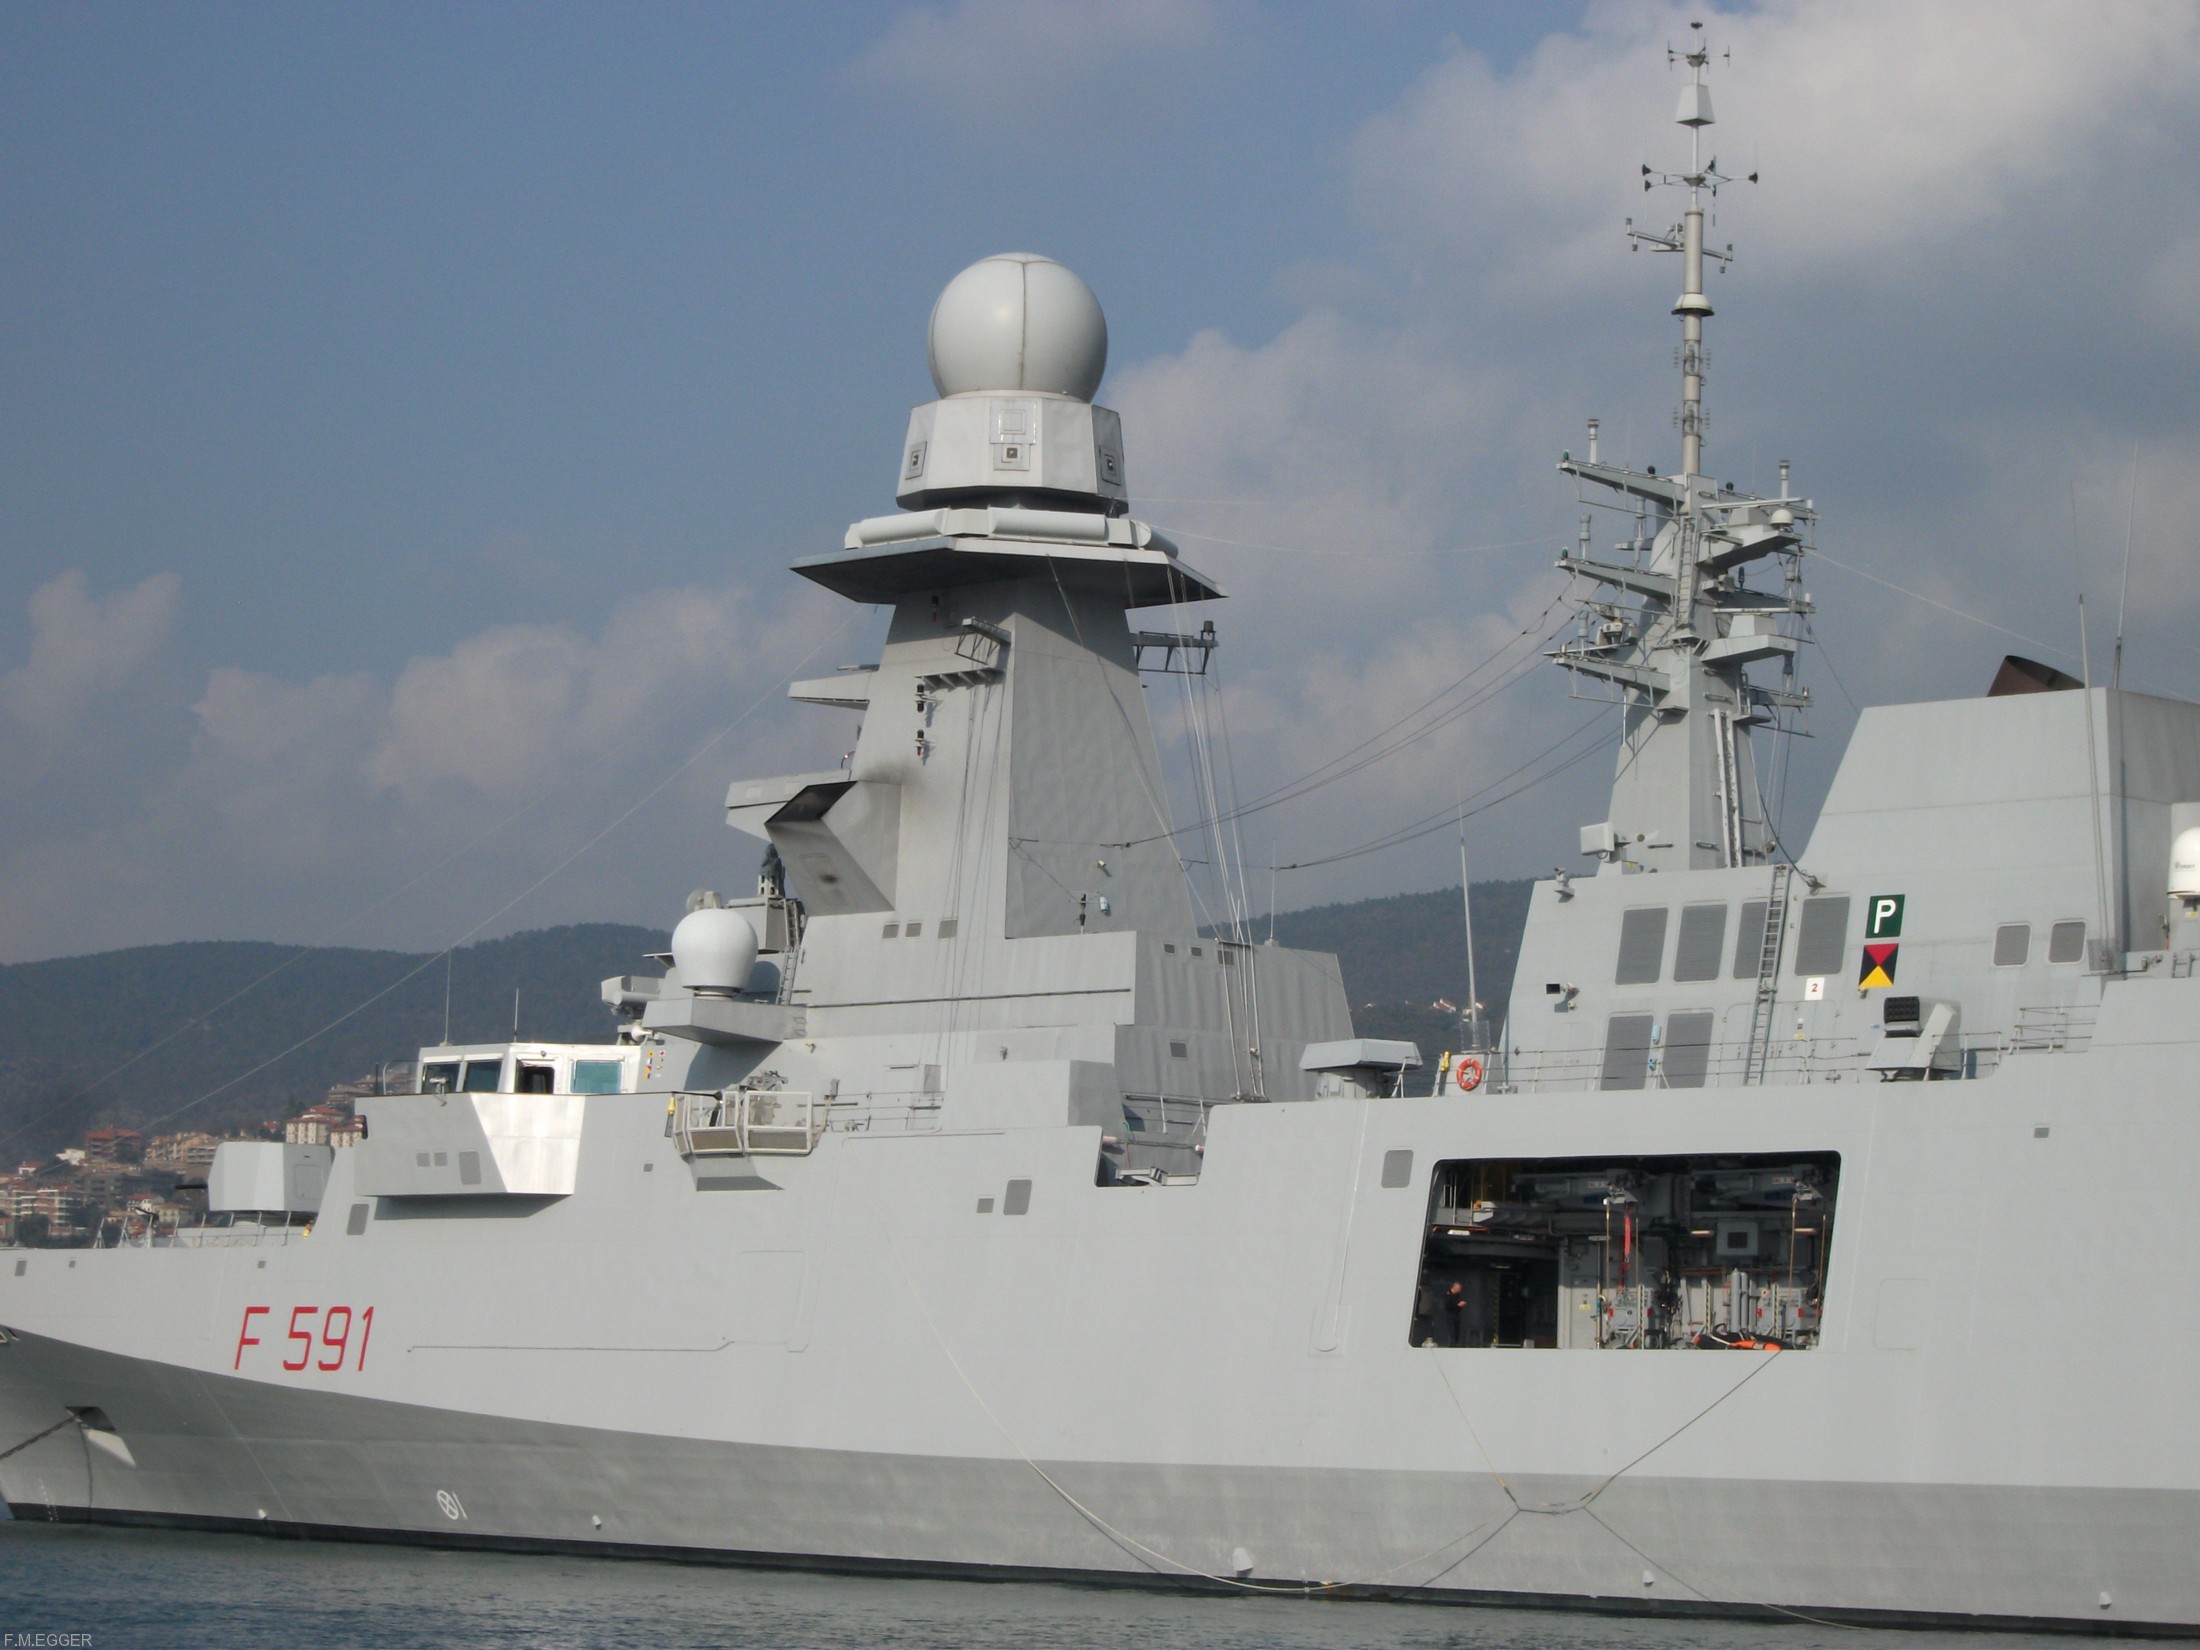 f-591 virginio fasan fremm bergamini class frigate italian navy marine militare 35